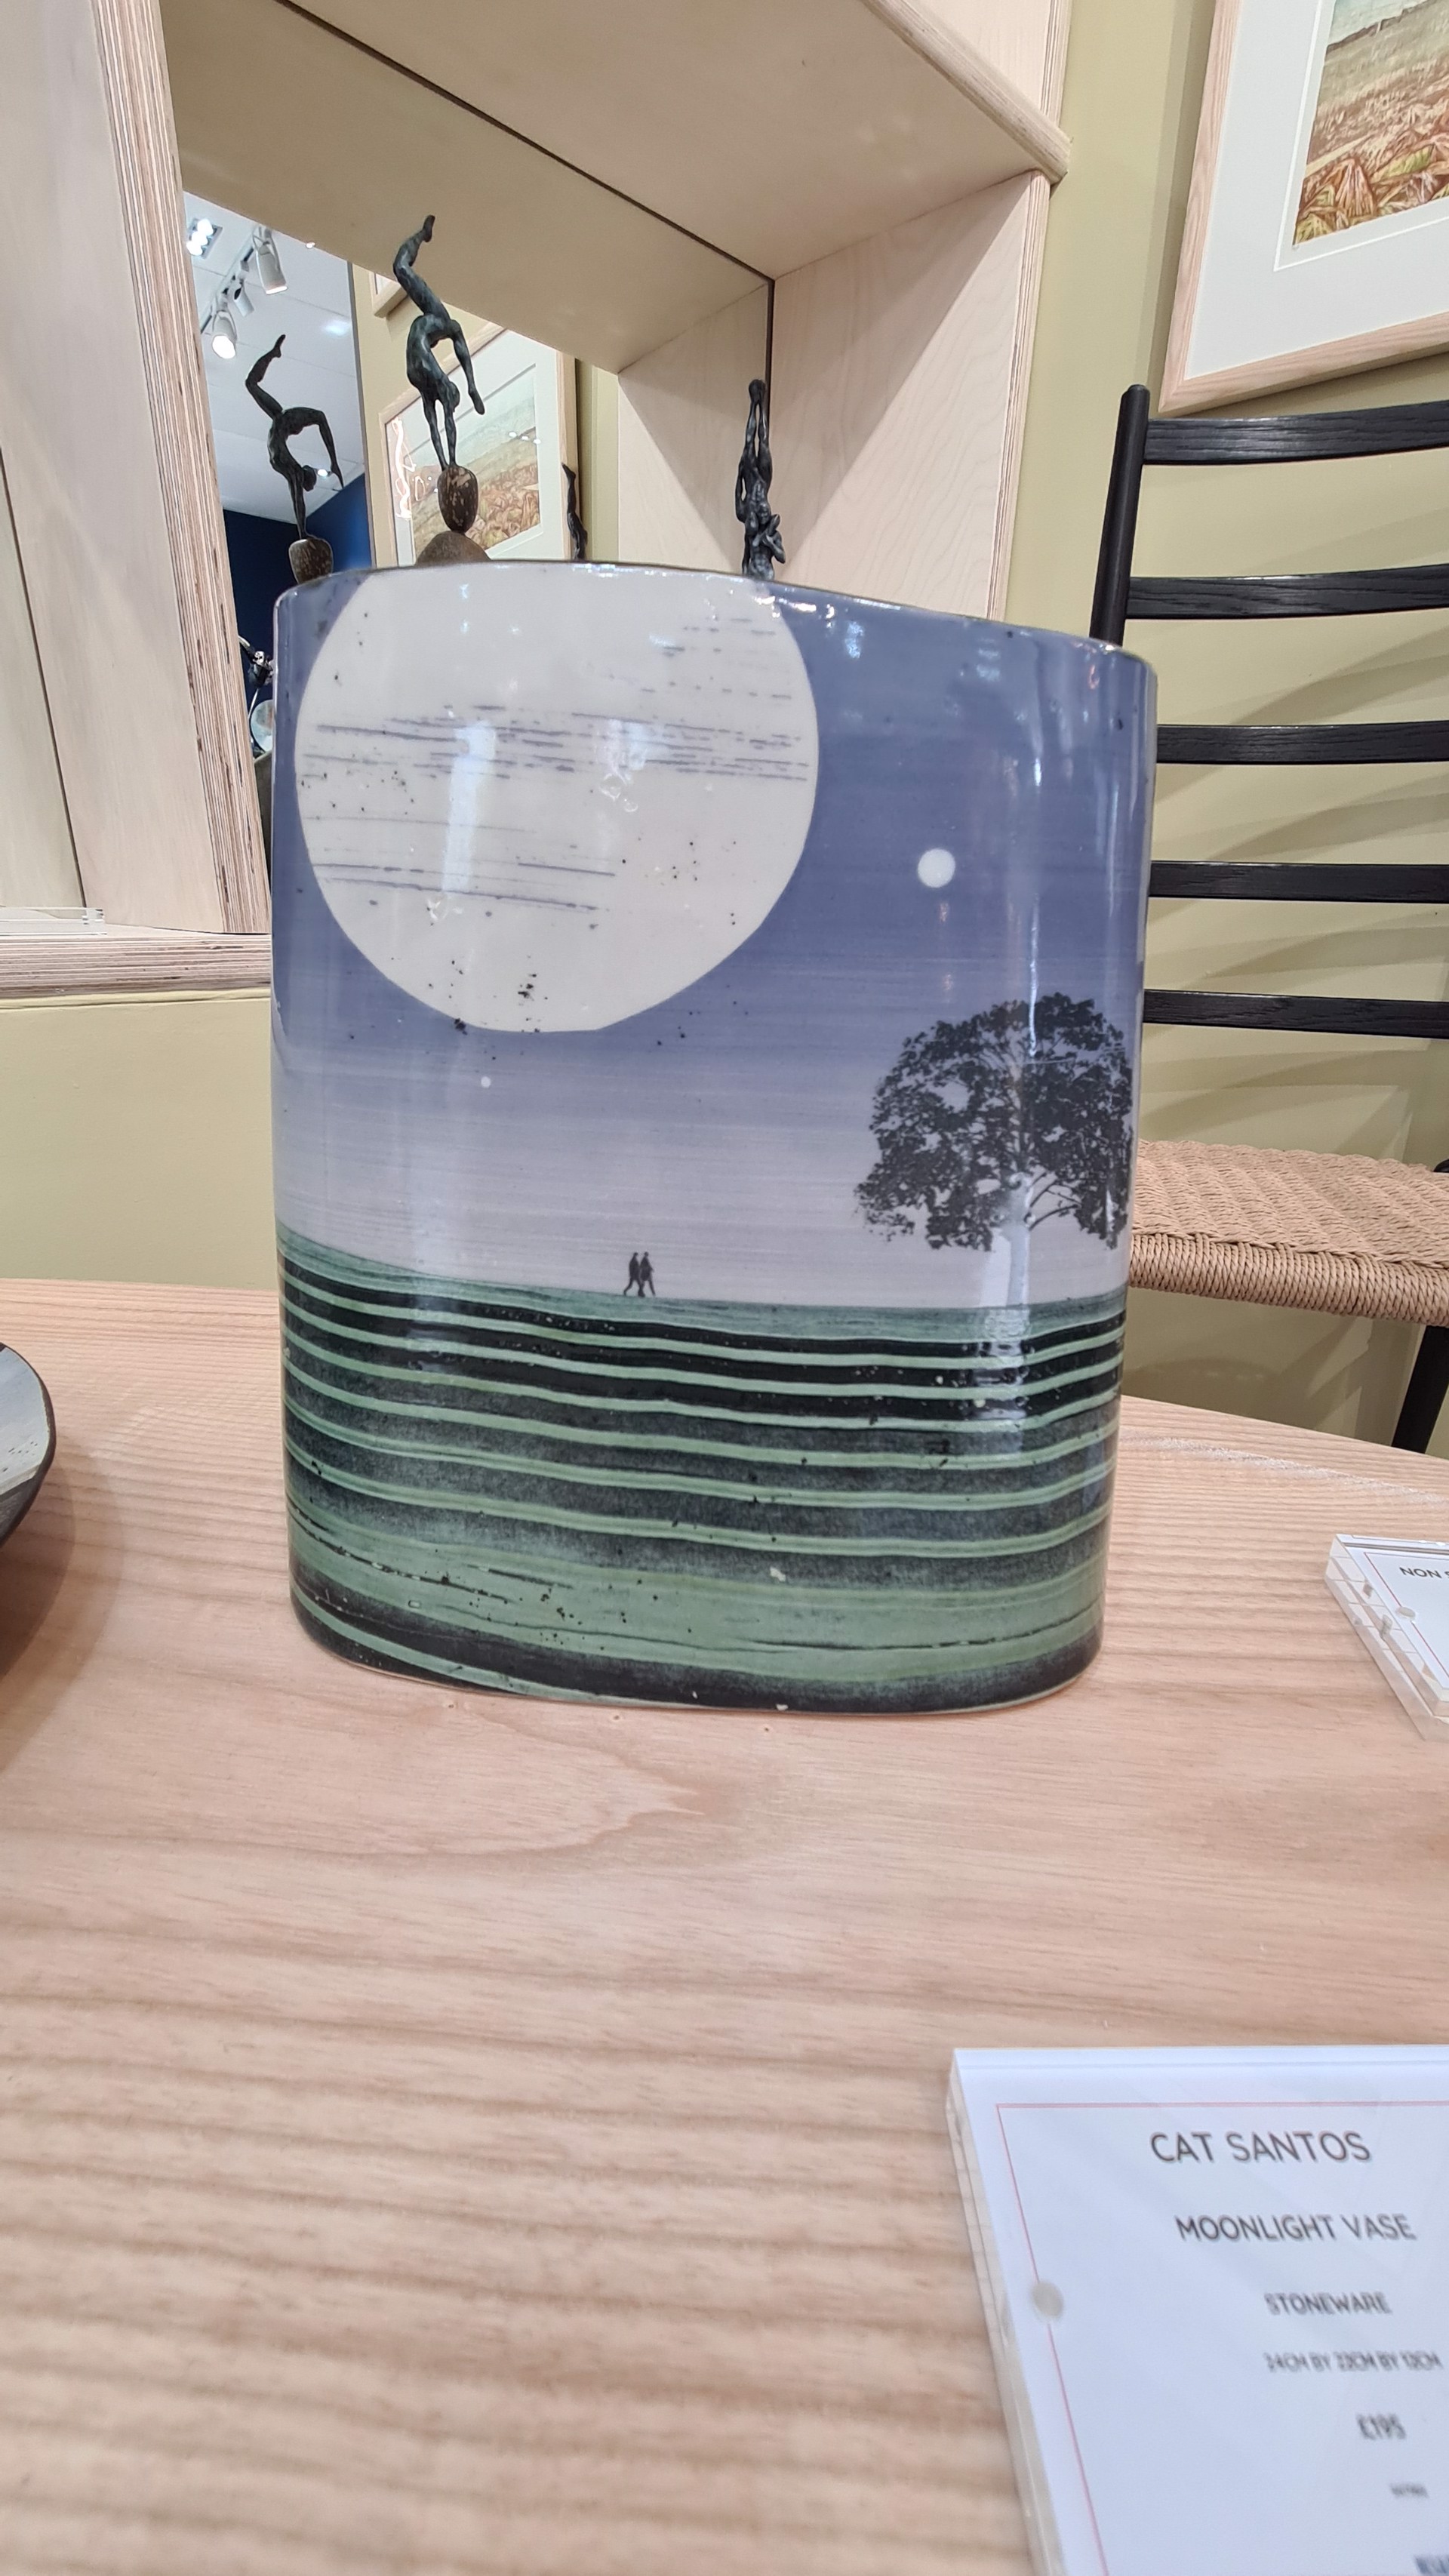 Moonlight Vase by Cat Santos